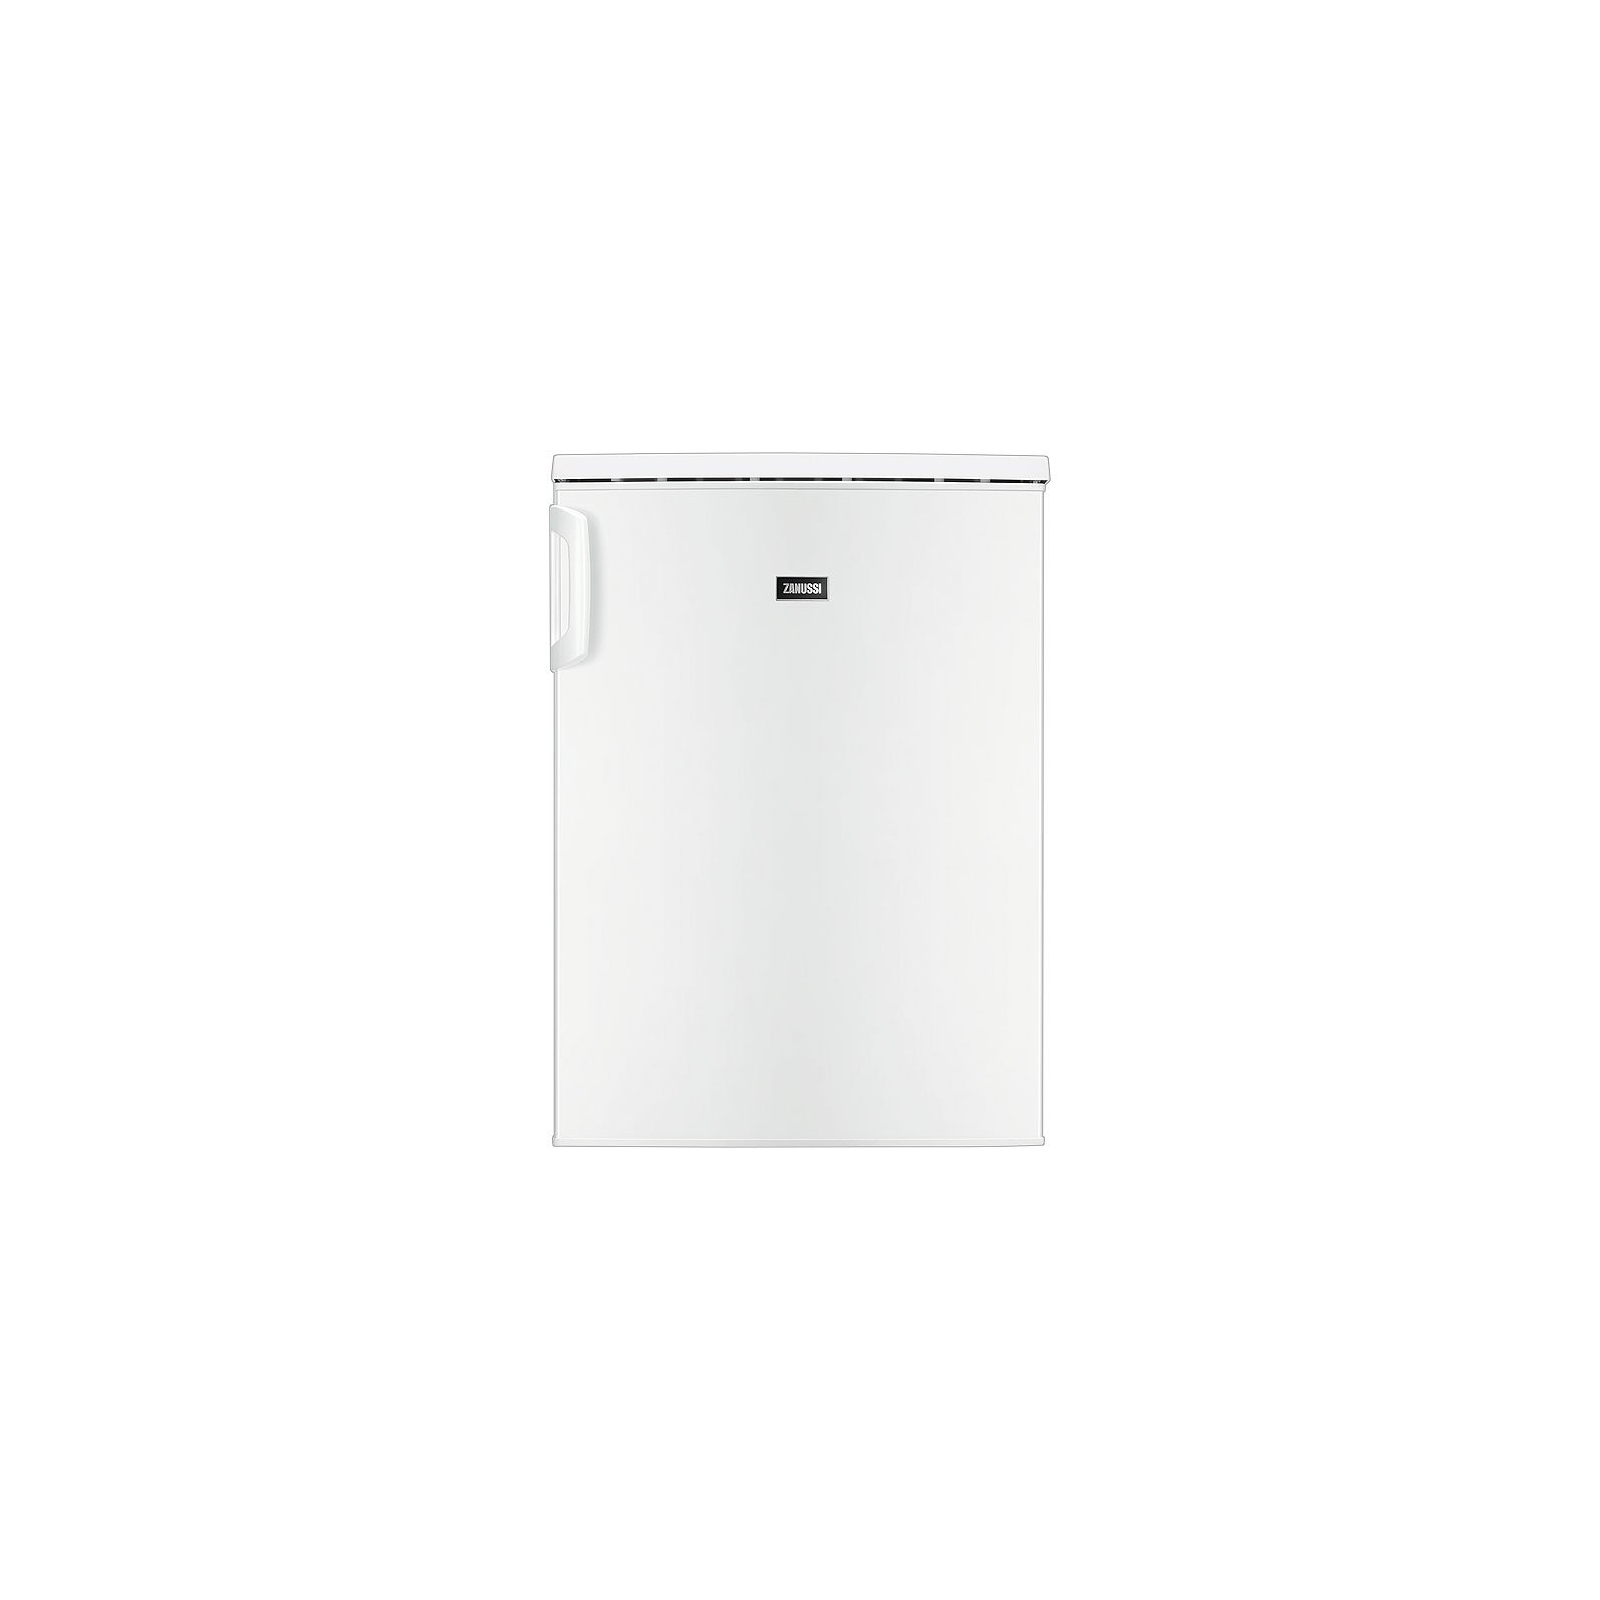 Холодильник Zanussi ZRG 16605 WA (ZRG16605WA)